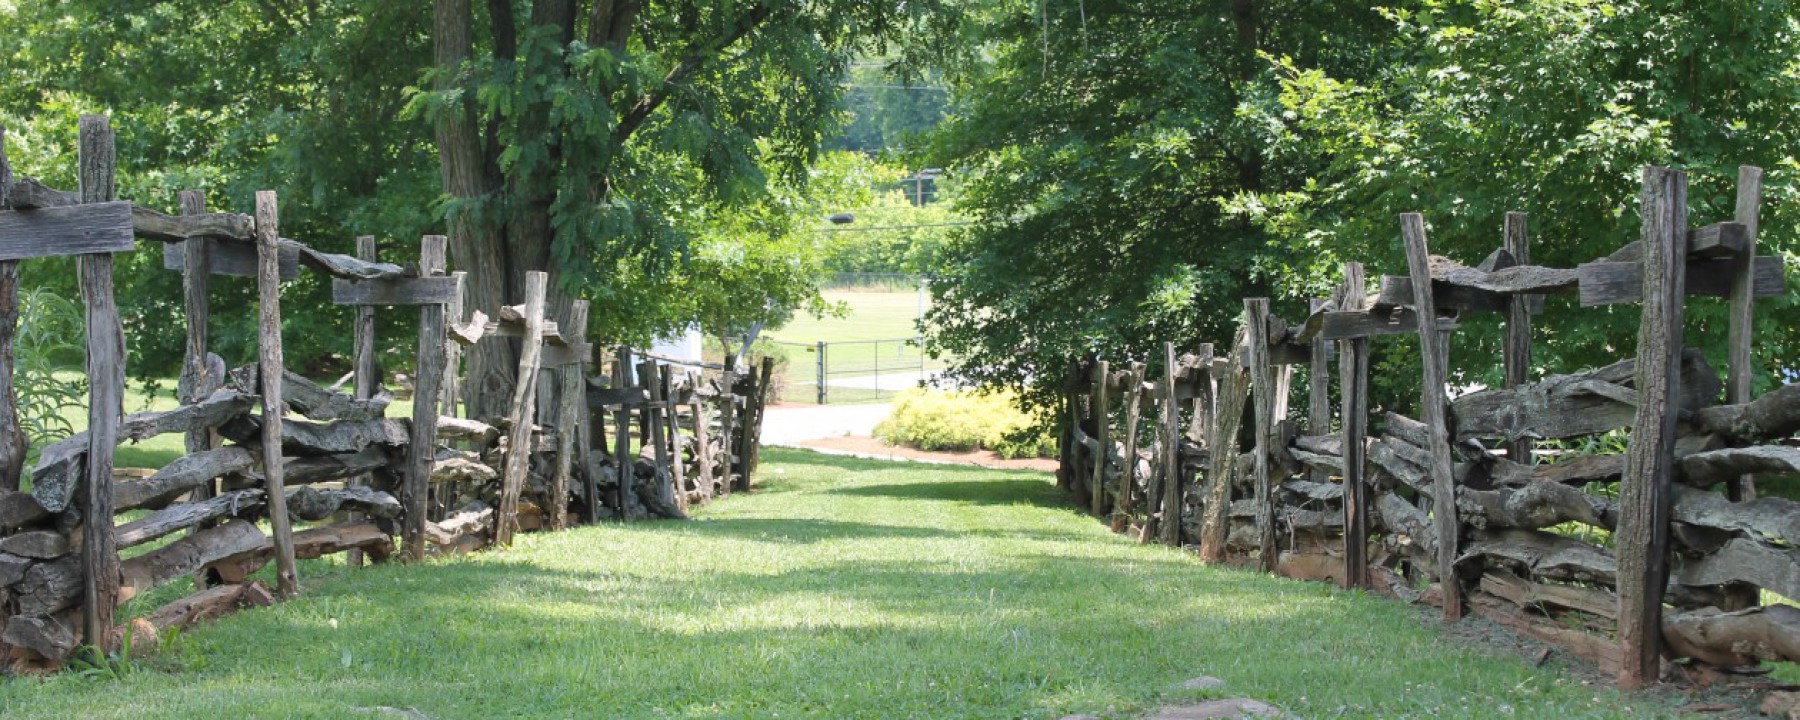 Grassy walkway in Old Salem, NC